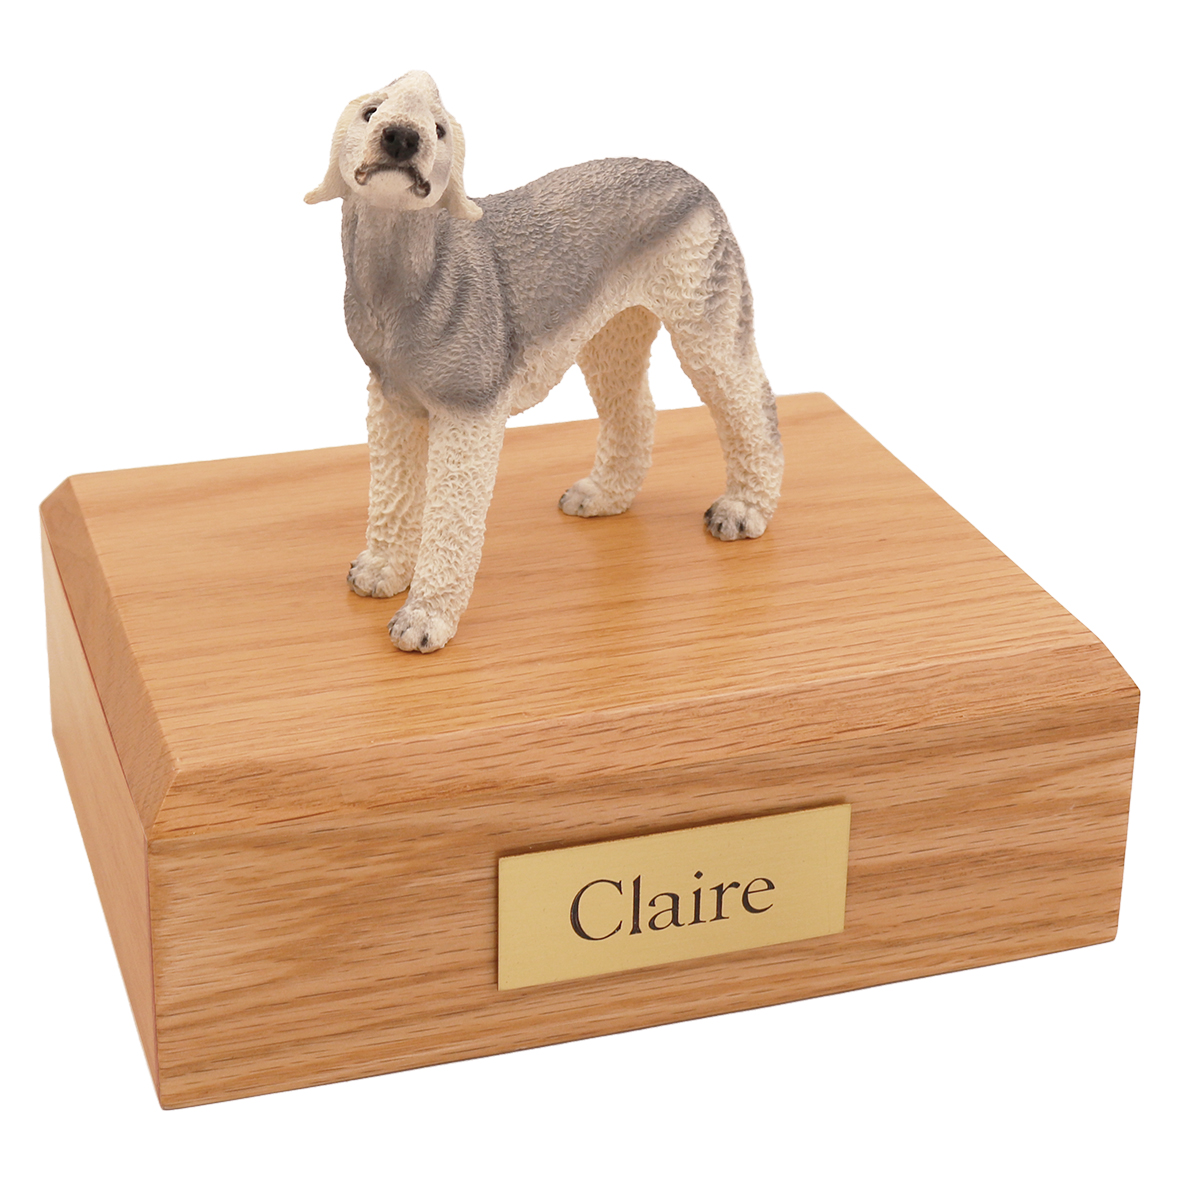 Dog, Bedlington Terrier, Gray - Figurine Urn